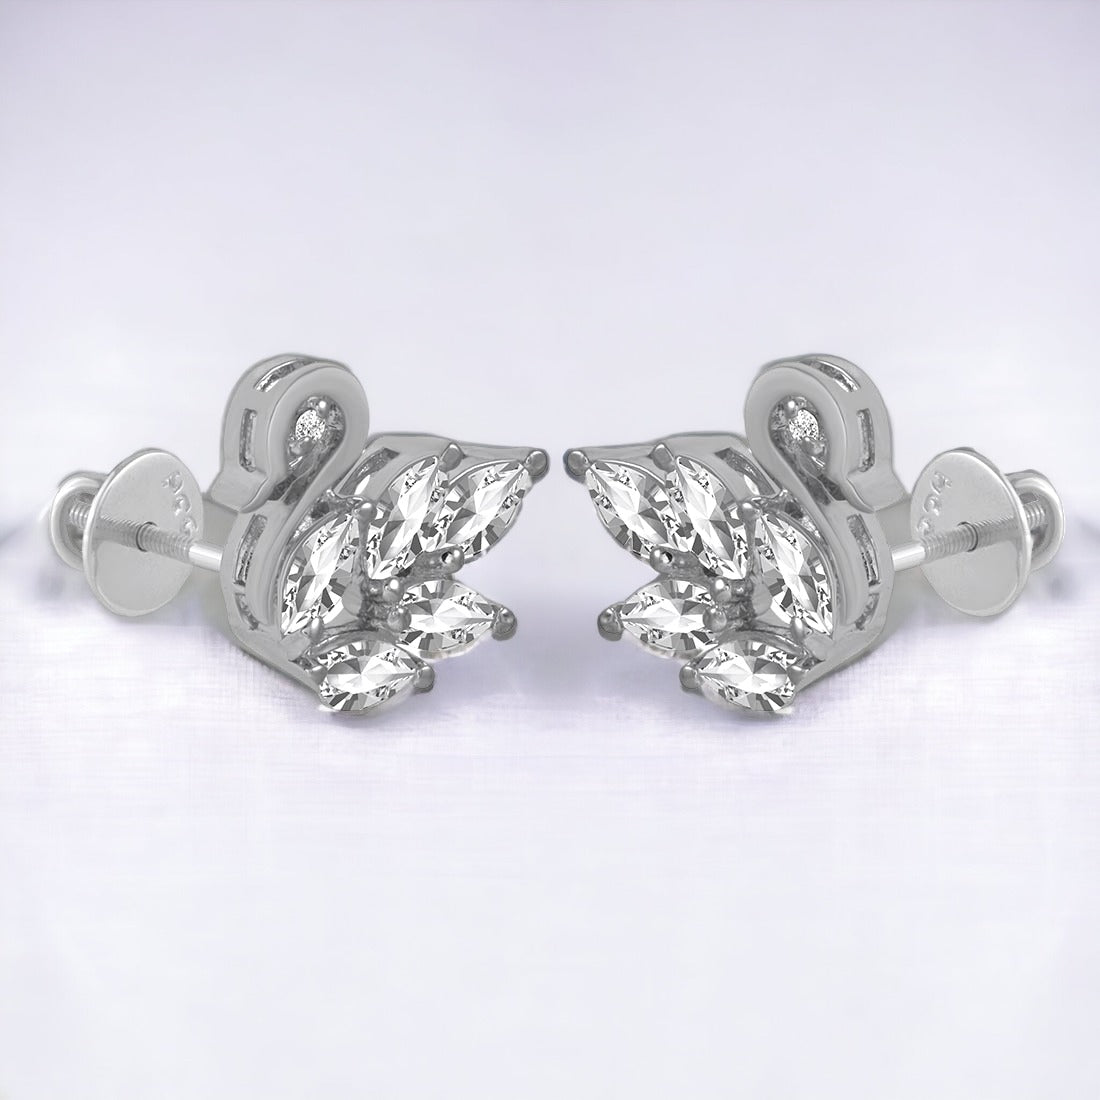 Swan Stud Earrings With 925 Purity For Women & Girls